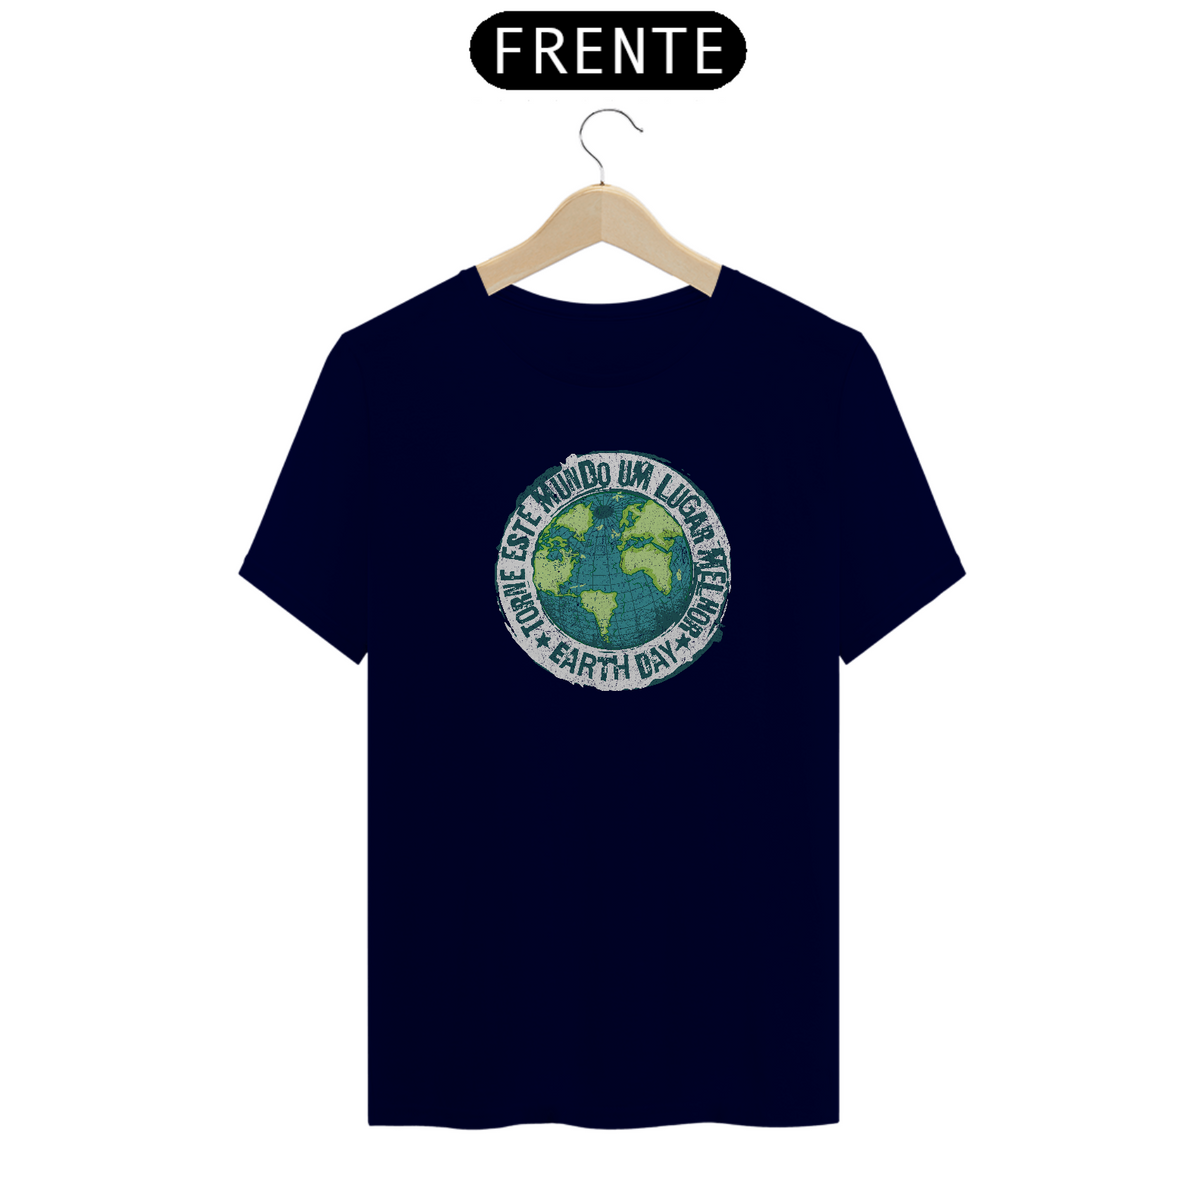 Nome do produto: Camiseta Q Col. Natureza Earth day